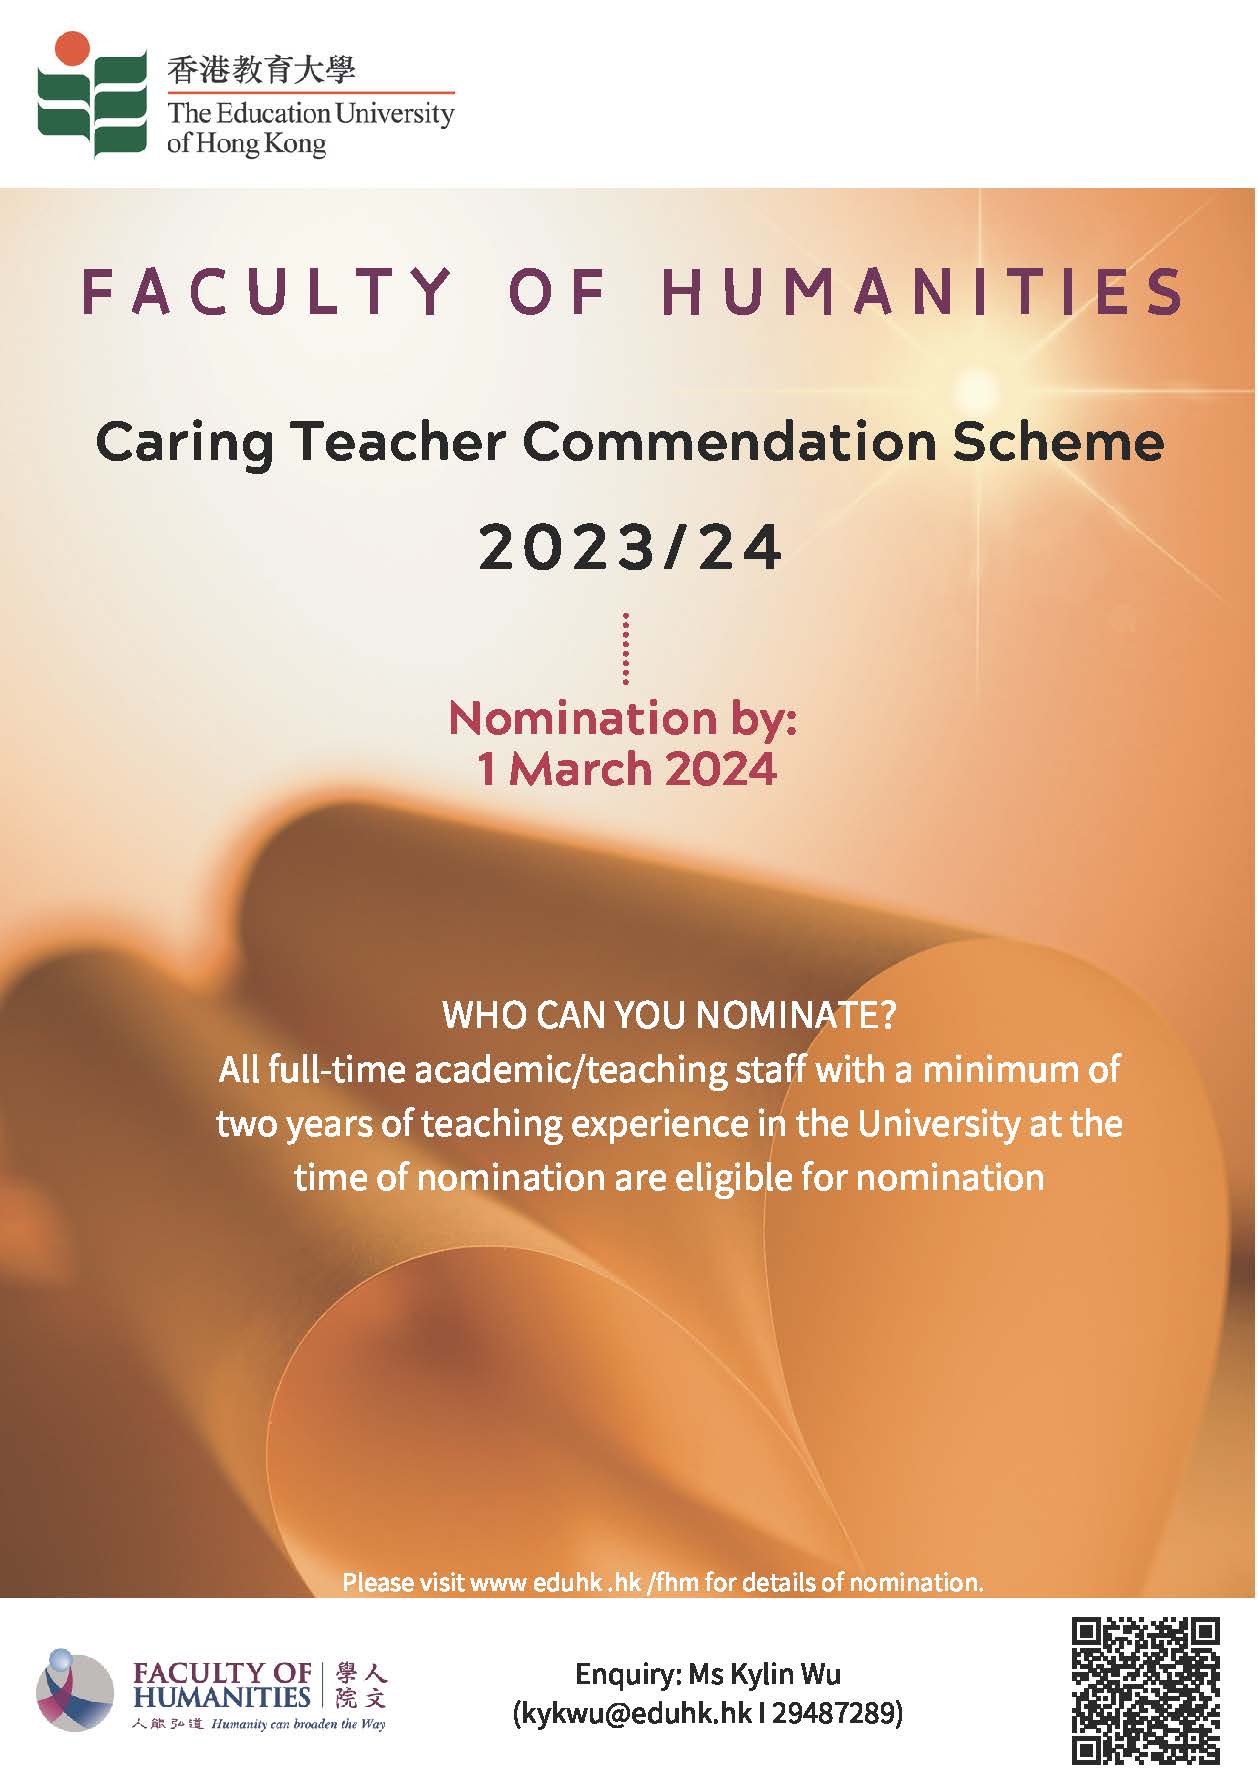 Caring Teacher Commendation Scheme 2023/24